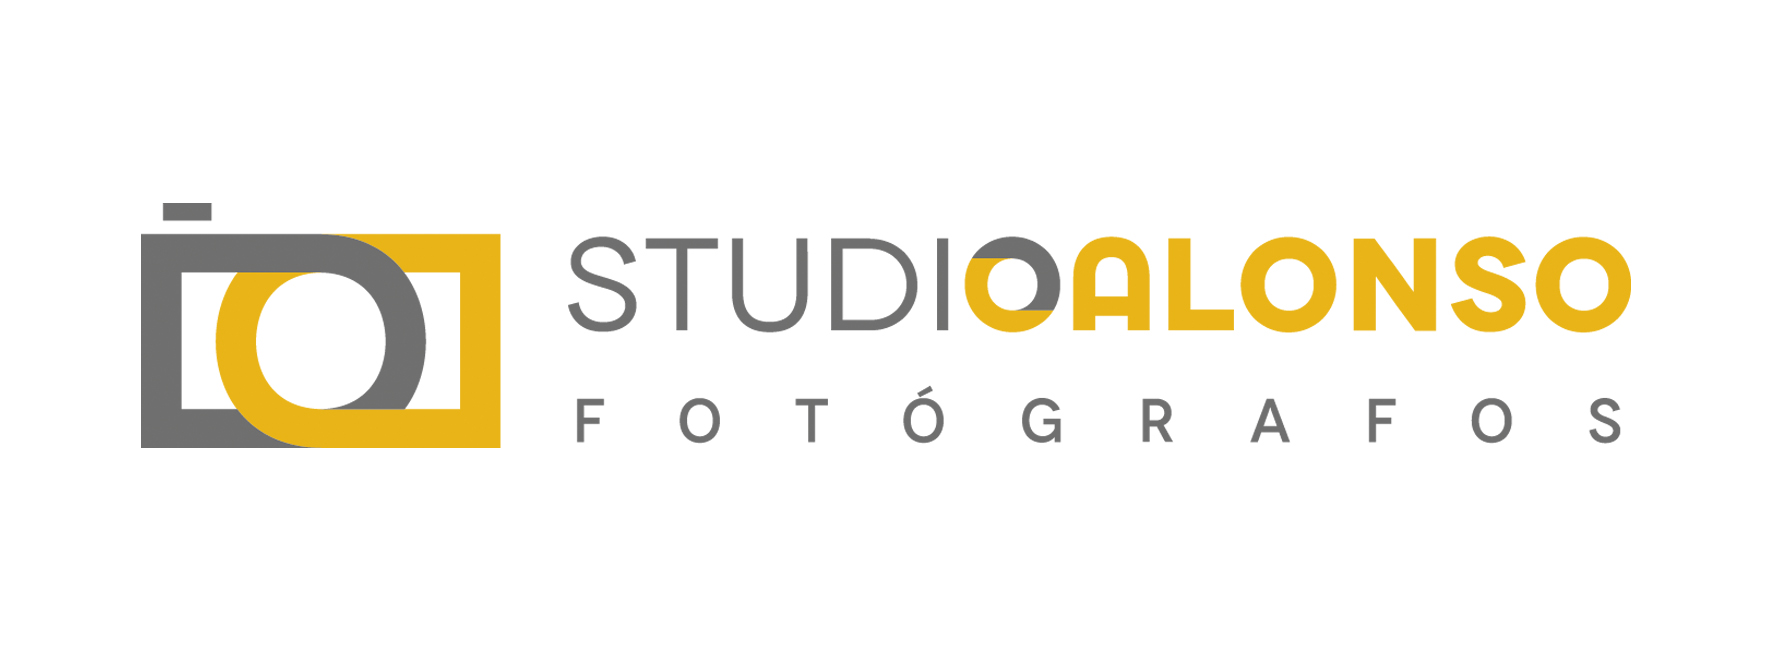 logotipo studioalonso fotografos